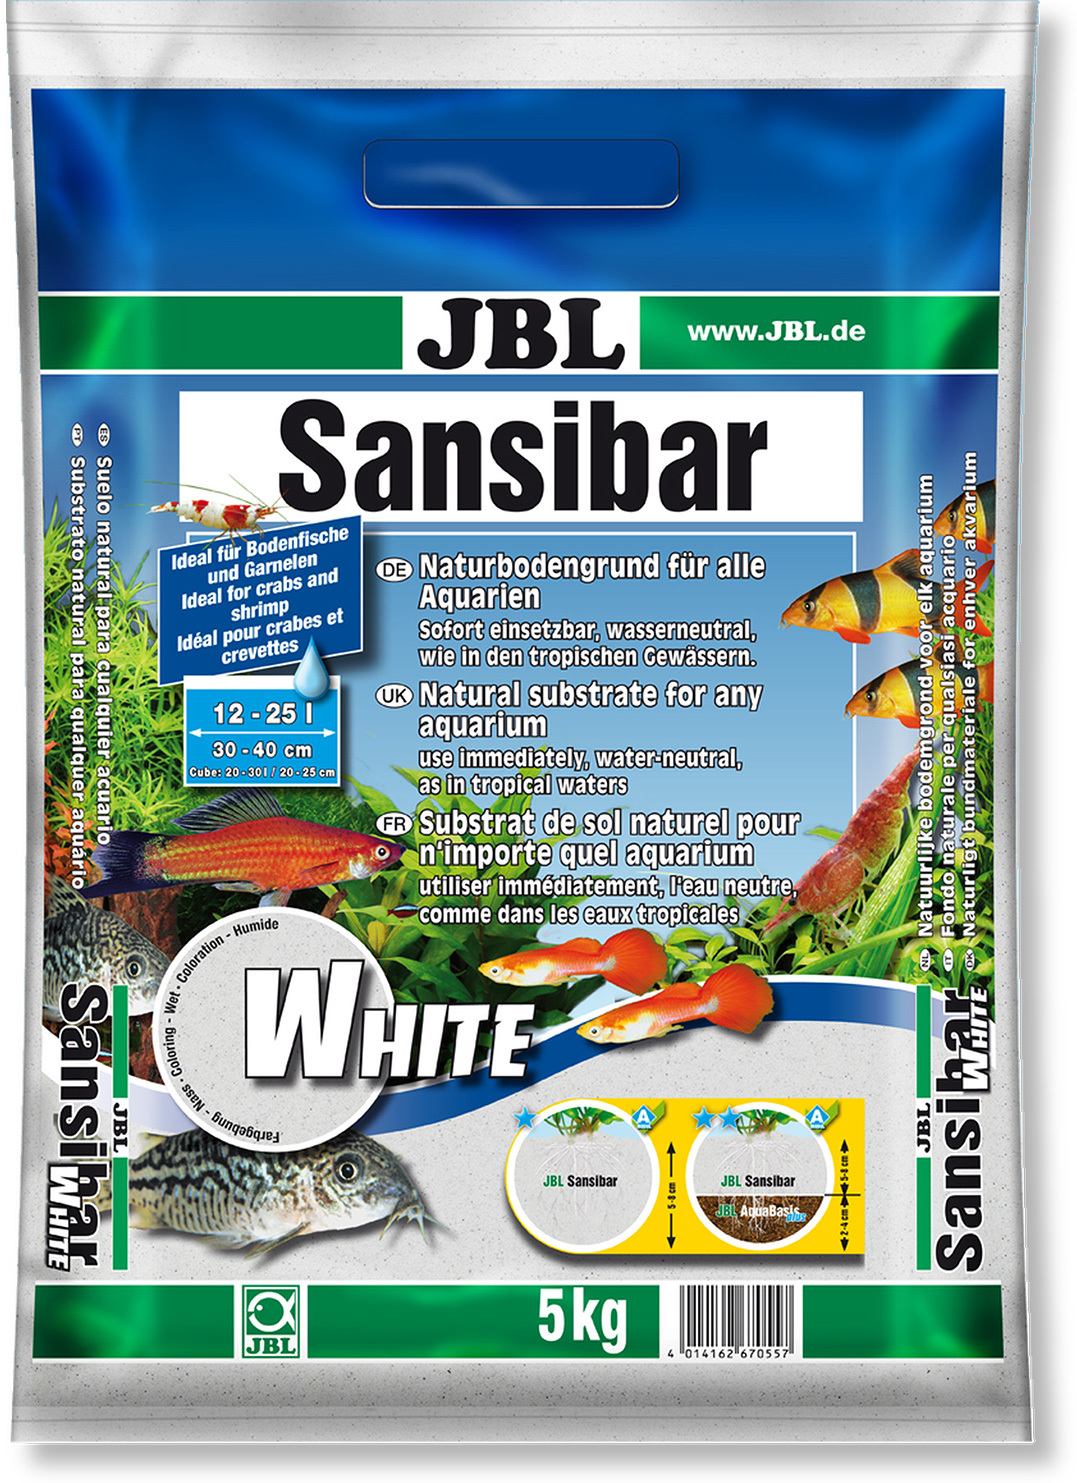 JBL Sansibar White substrat alb natural pentru acvariu